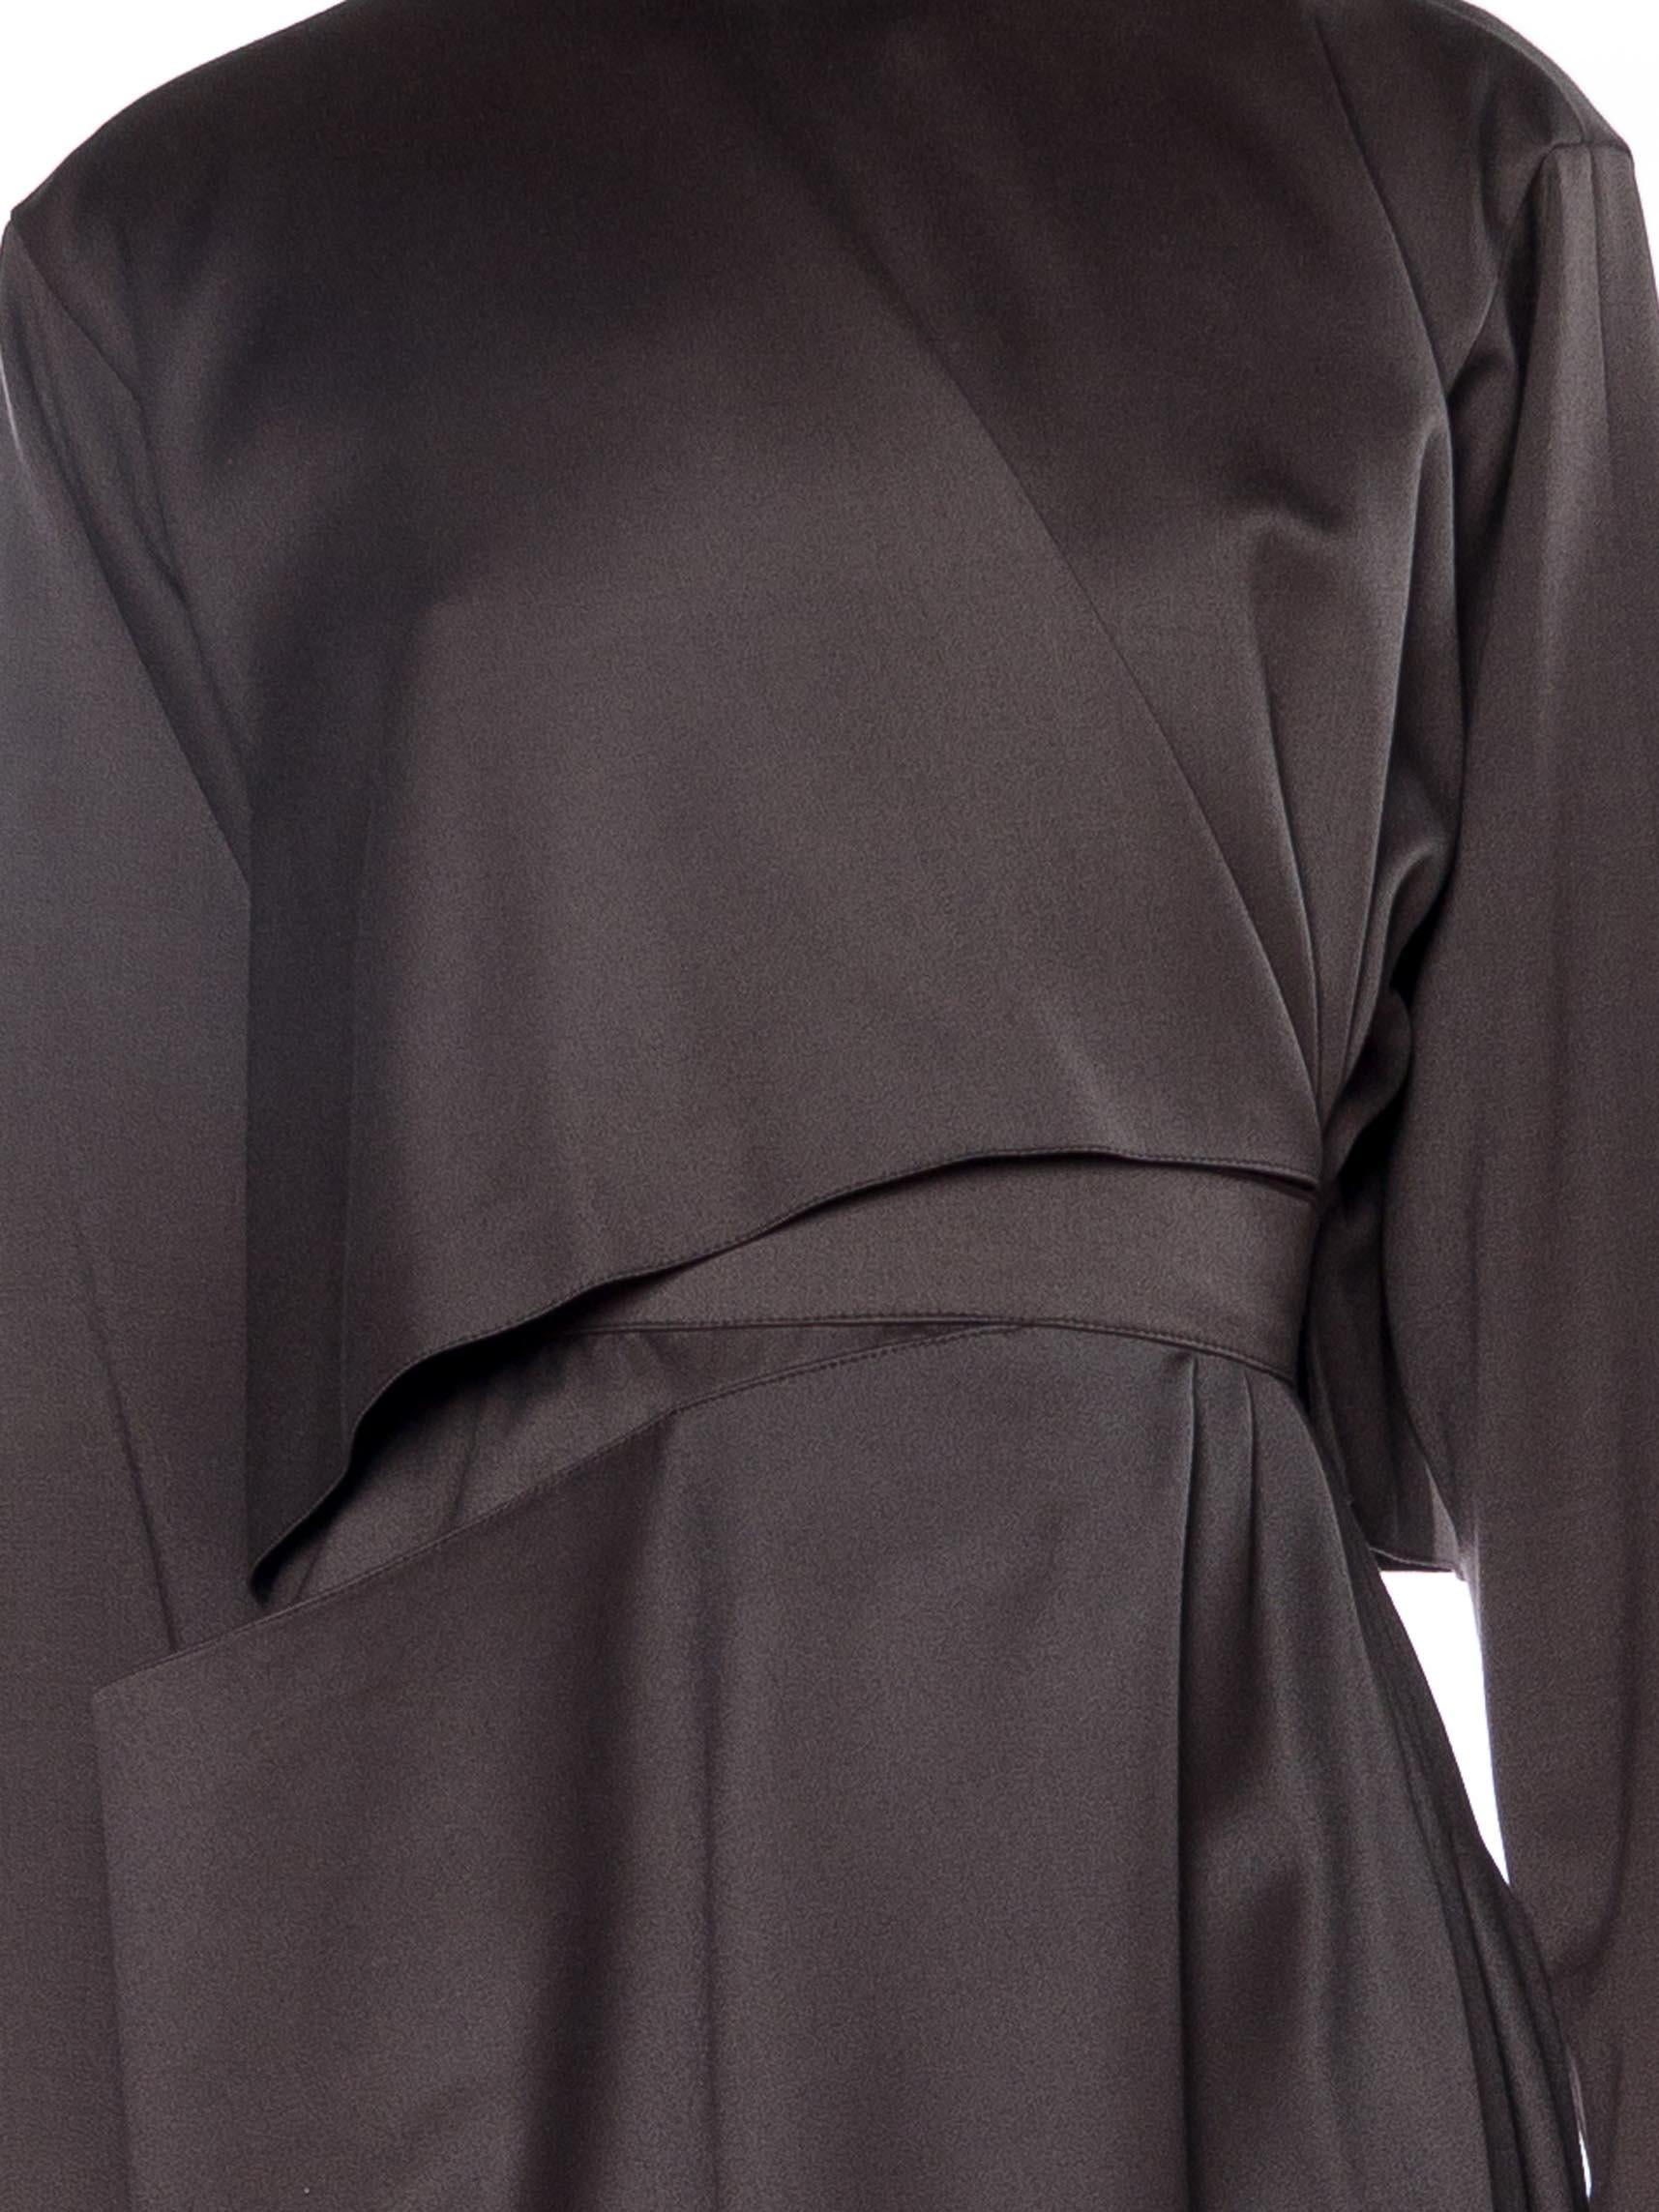 1980S Bernard Perris Chocolate Brown Asymetrical Structure Layered Dress 1